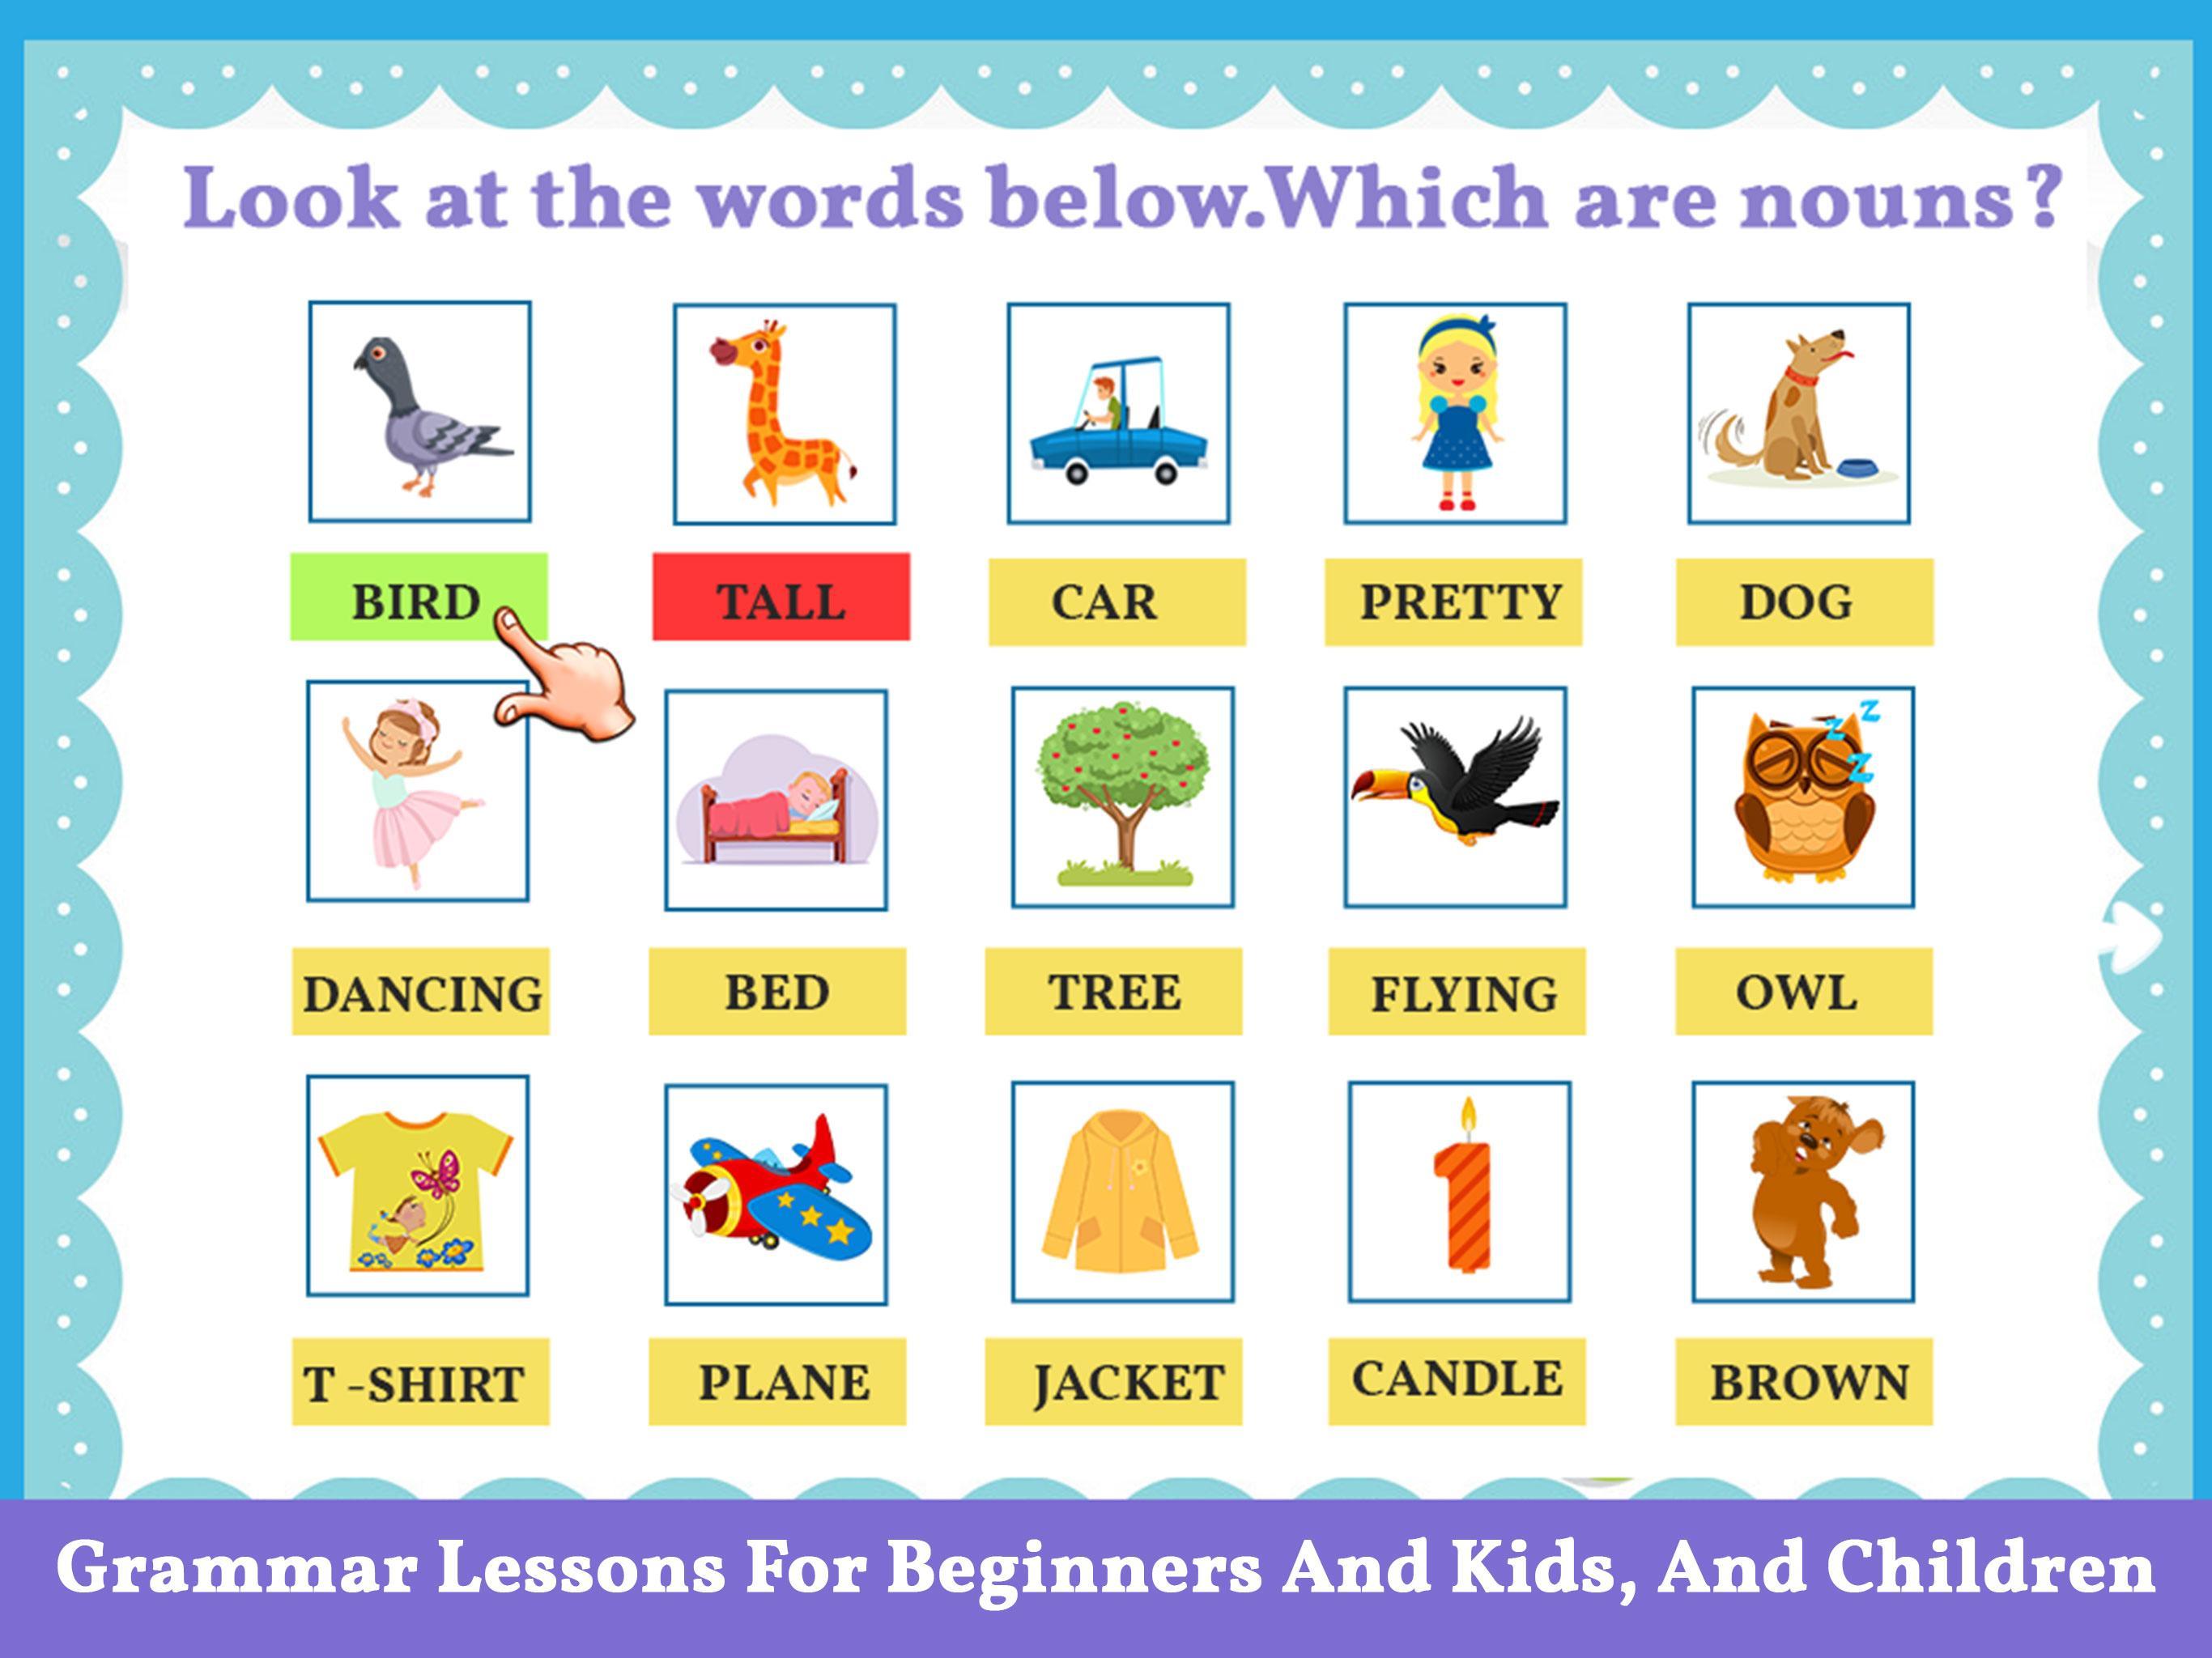 English Grammar and Vocabulary for Kids 13.0 Screenshot 16